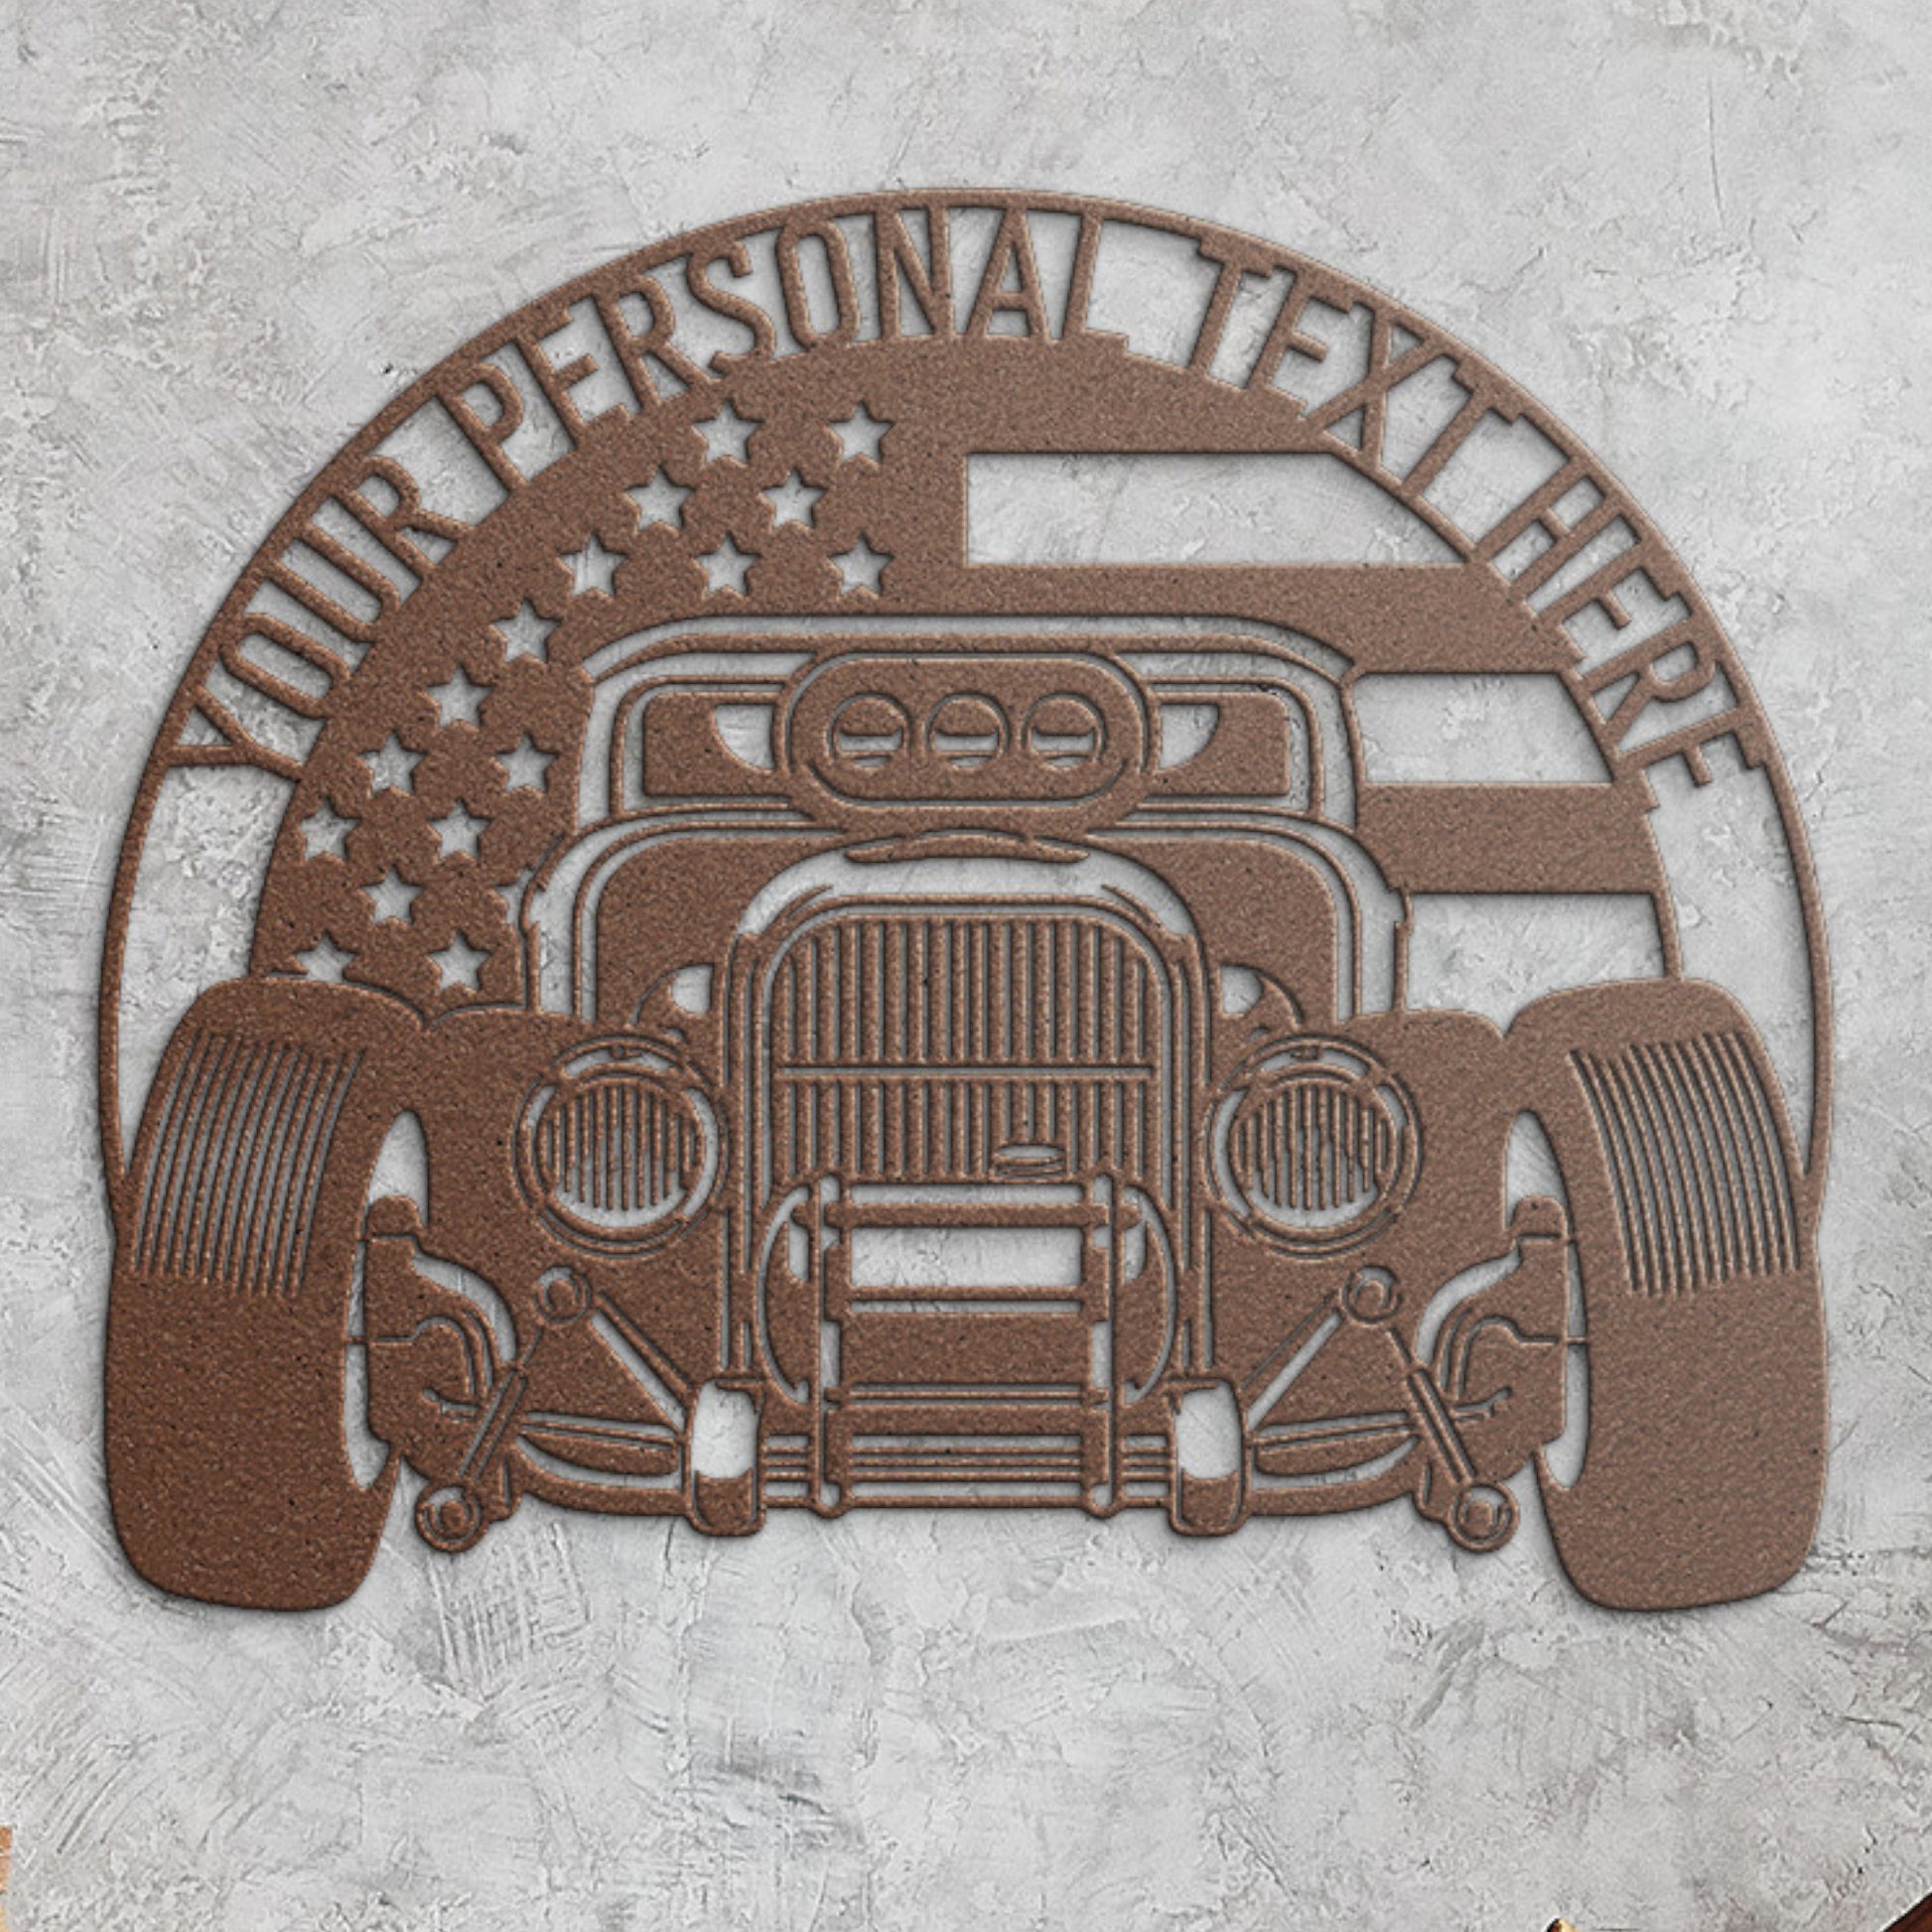 Personalized American Rat Rod Name Metal Sign. Custom Patriotic Garage Wall Decor. Mechanic Gift. Man Cave Wall Hanging. American Muscle Car